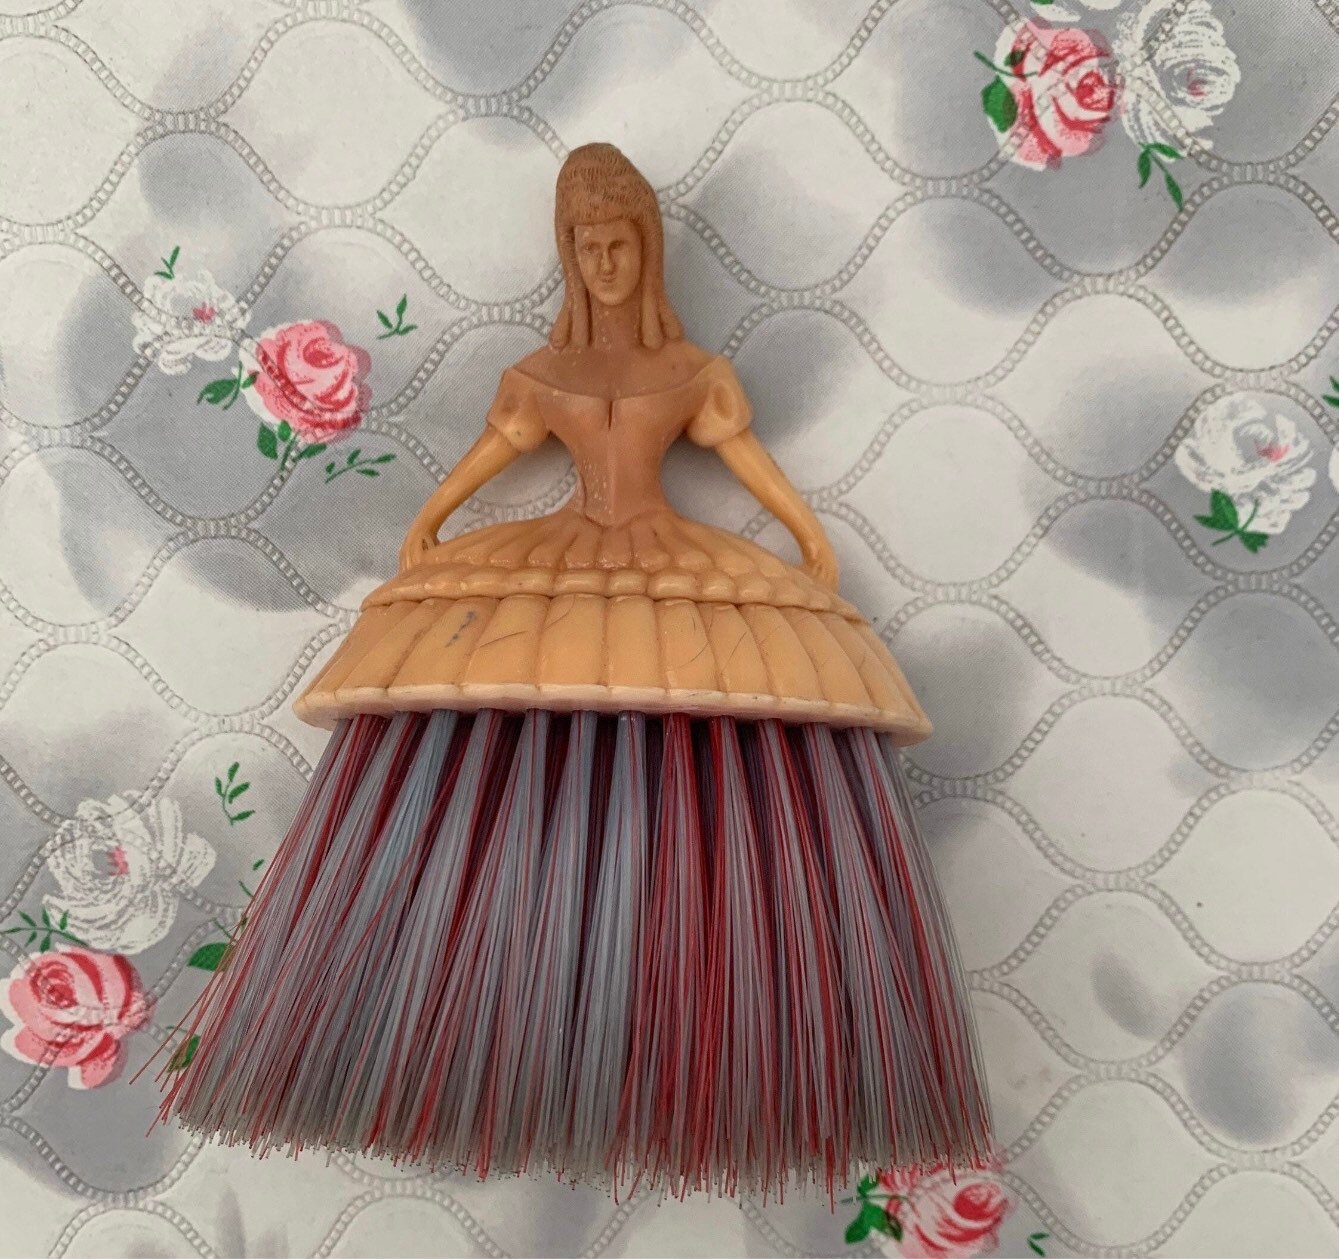 Crinoline Lady dustpan and brush